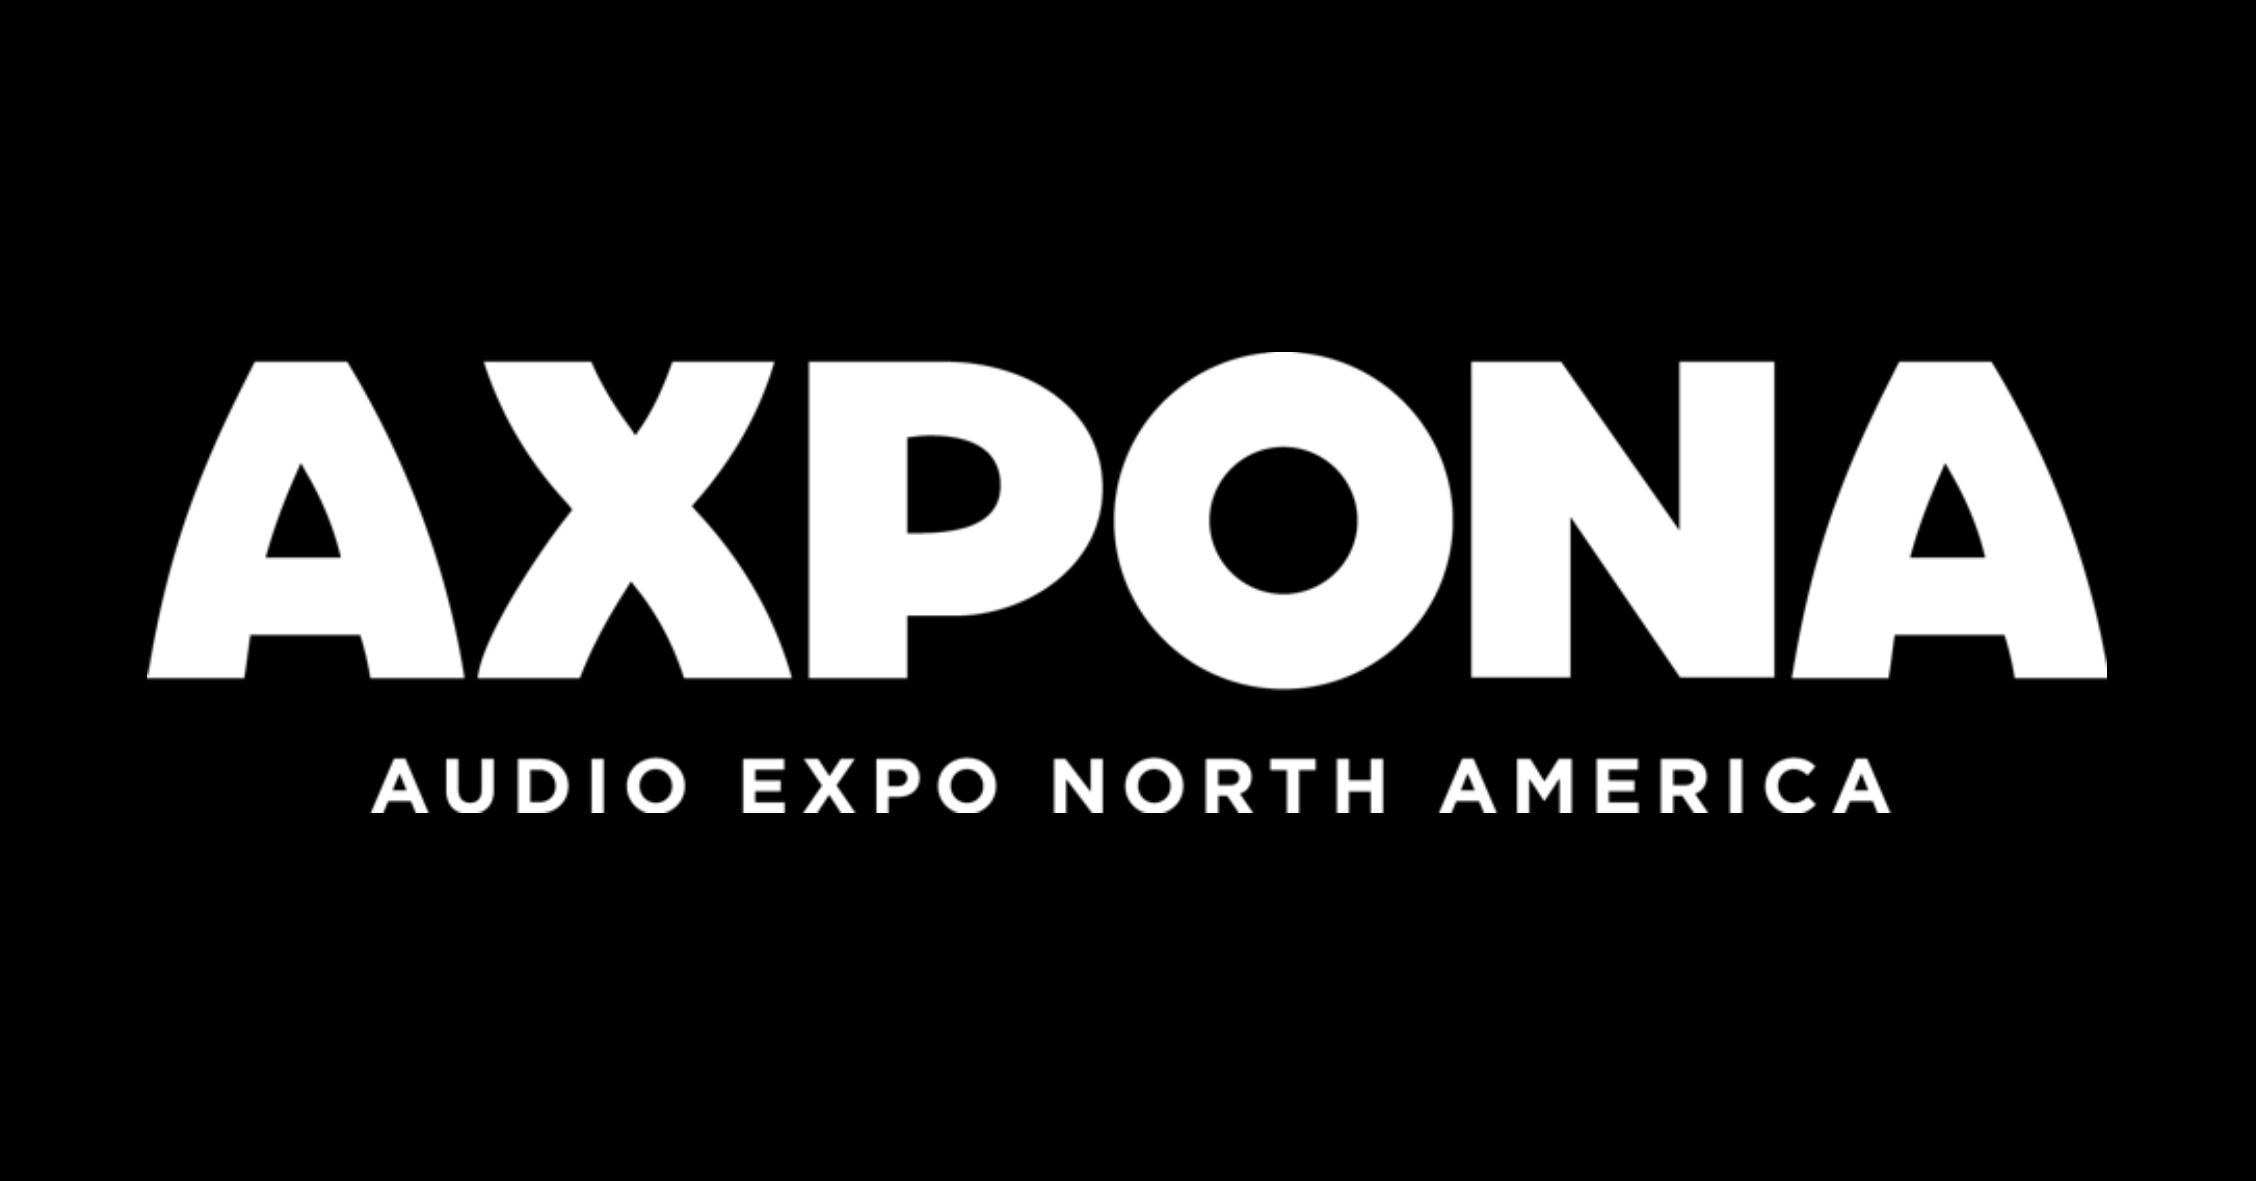 Axpona Audio Expo North America